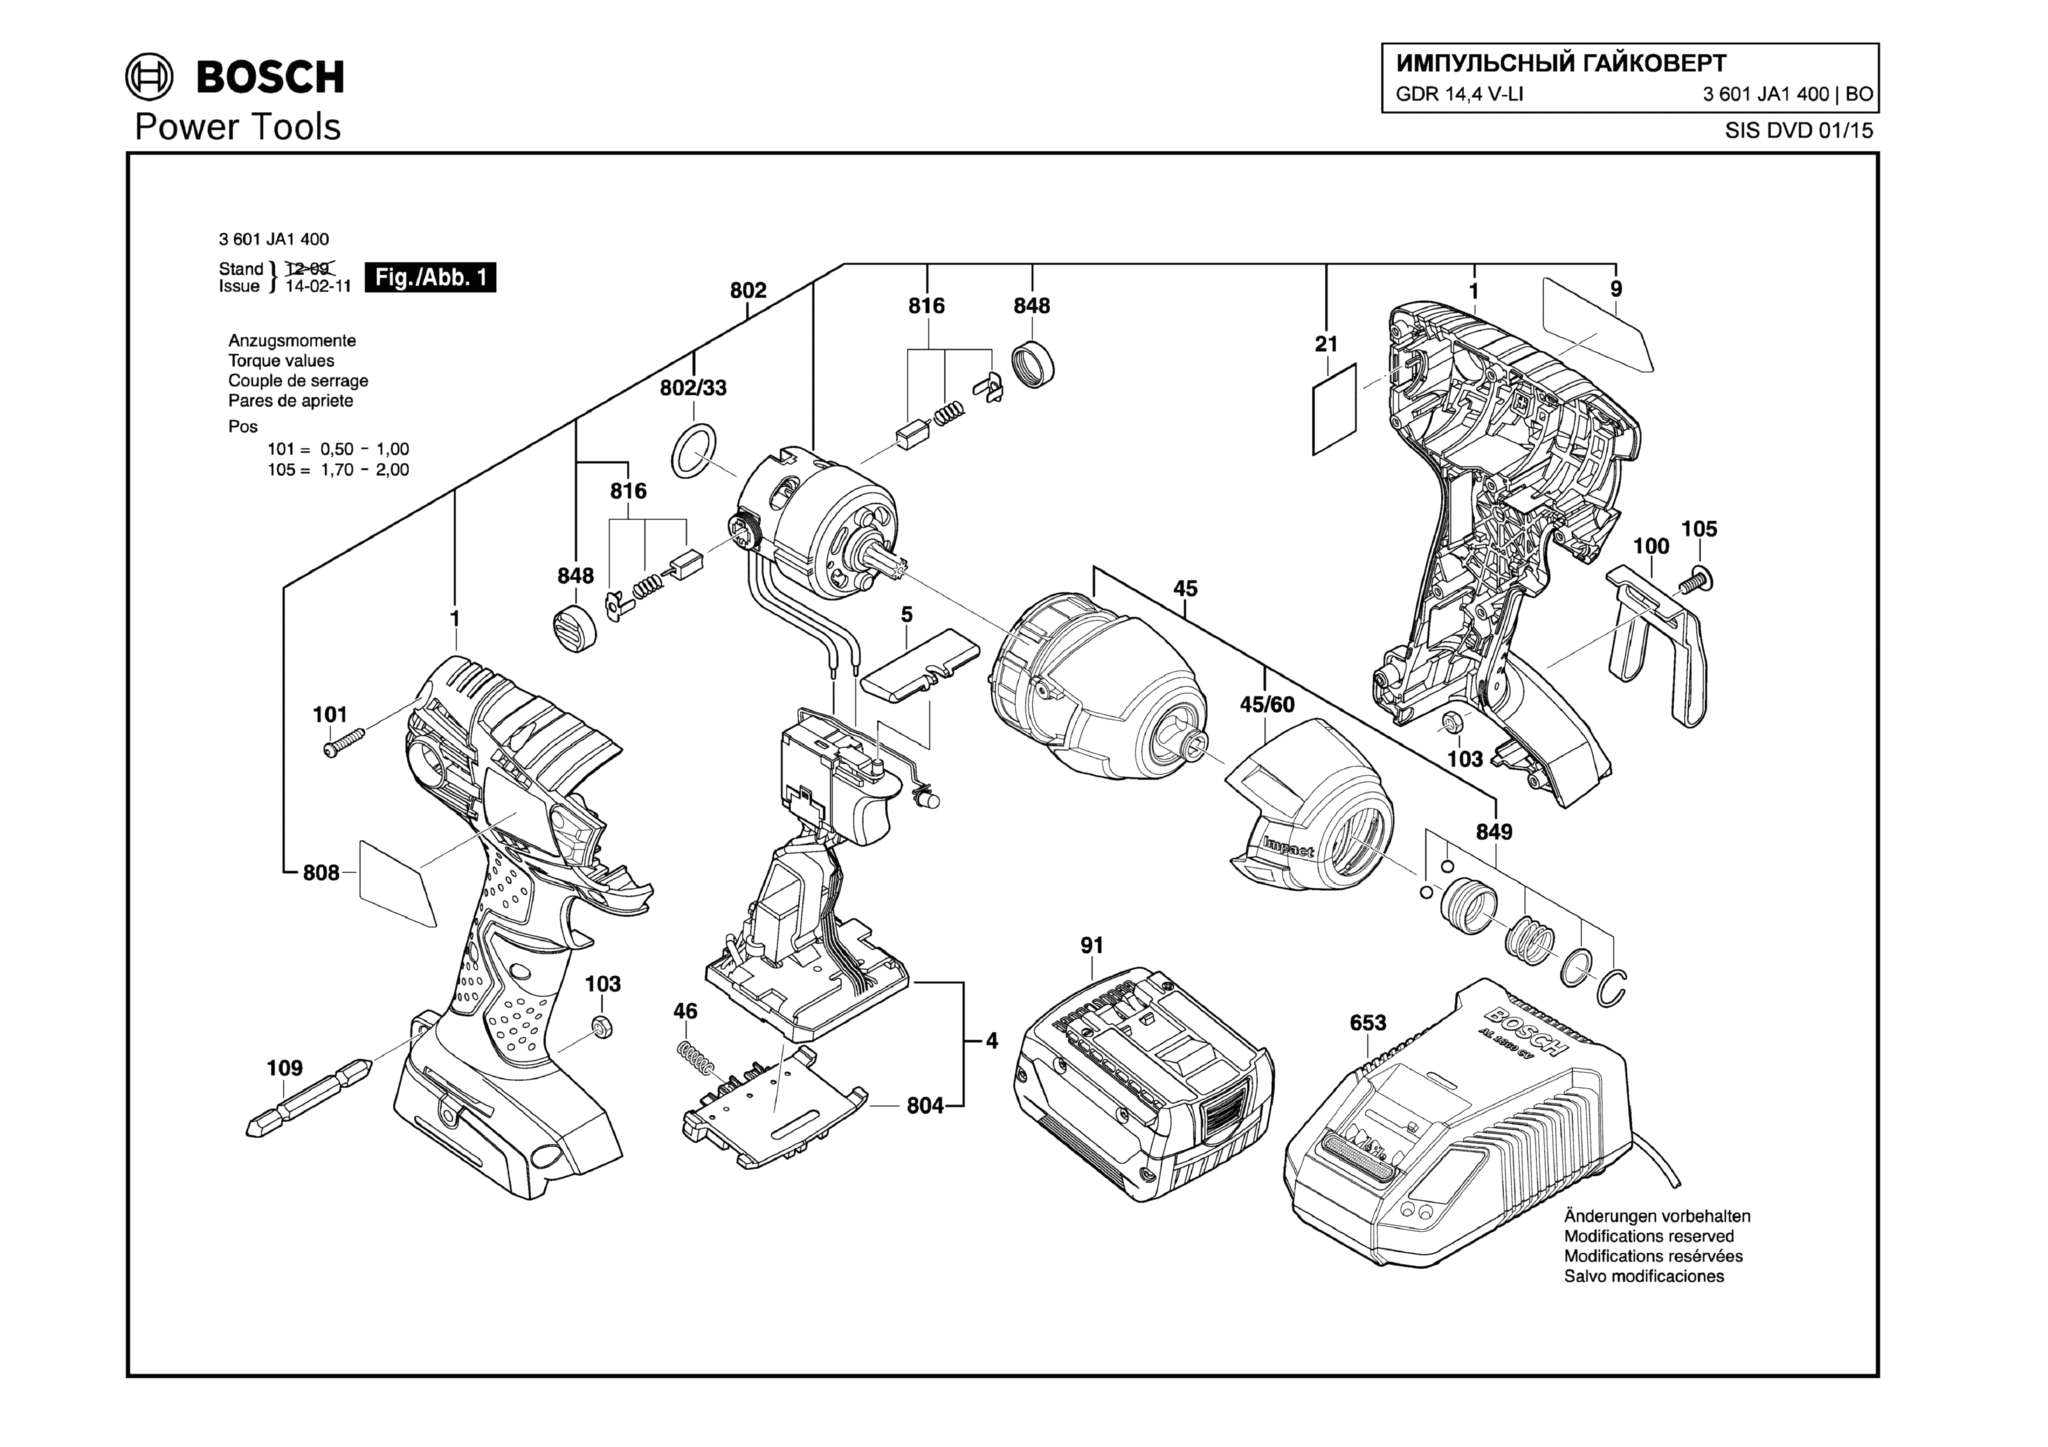 Запчасти, схема и деталировка Bosch GDR 14,4 V-LI (ТИП 3601JA1400)